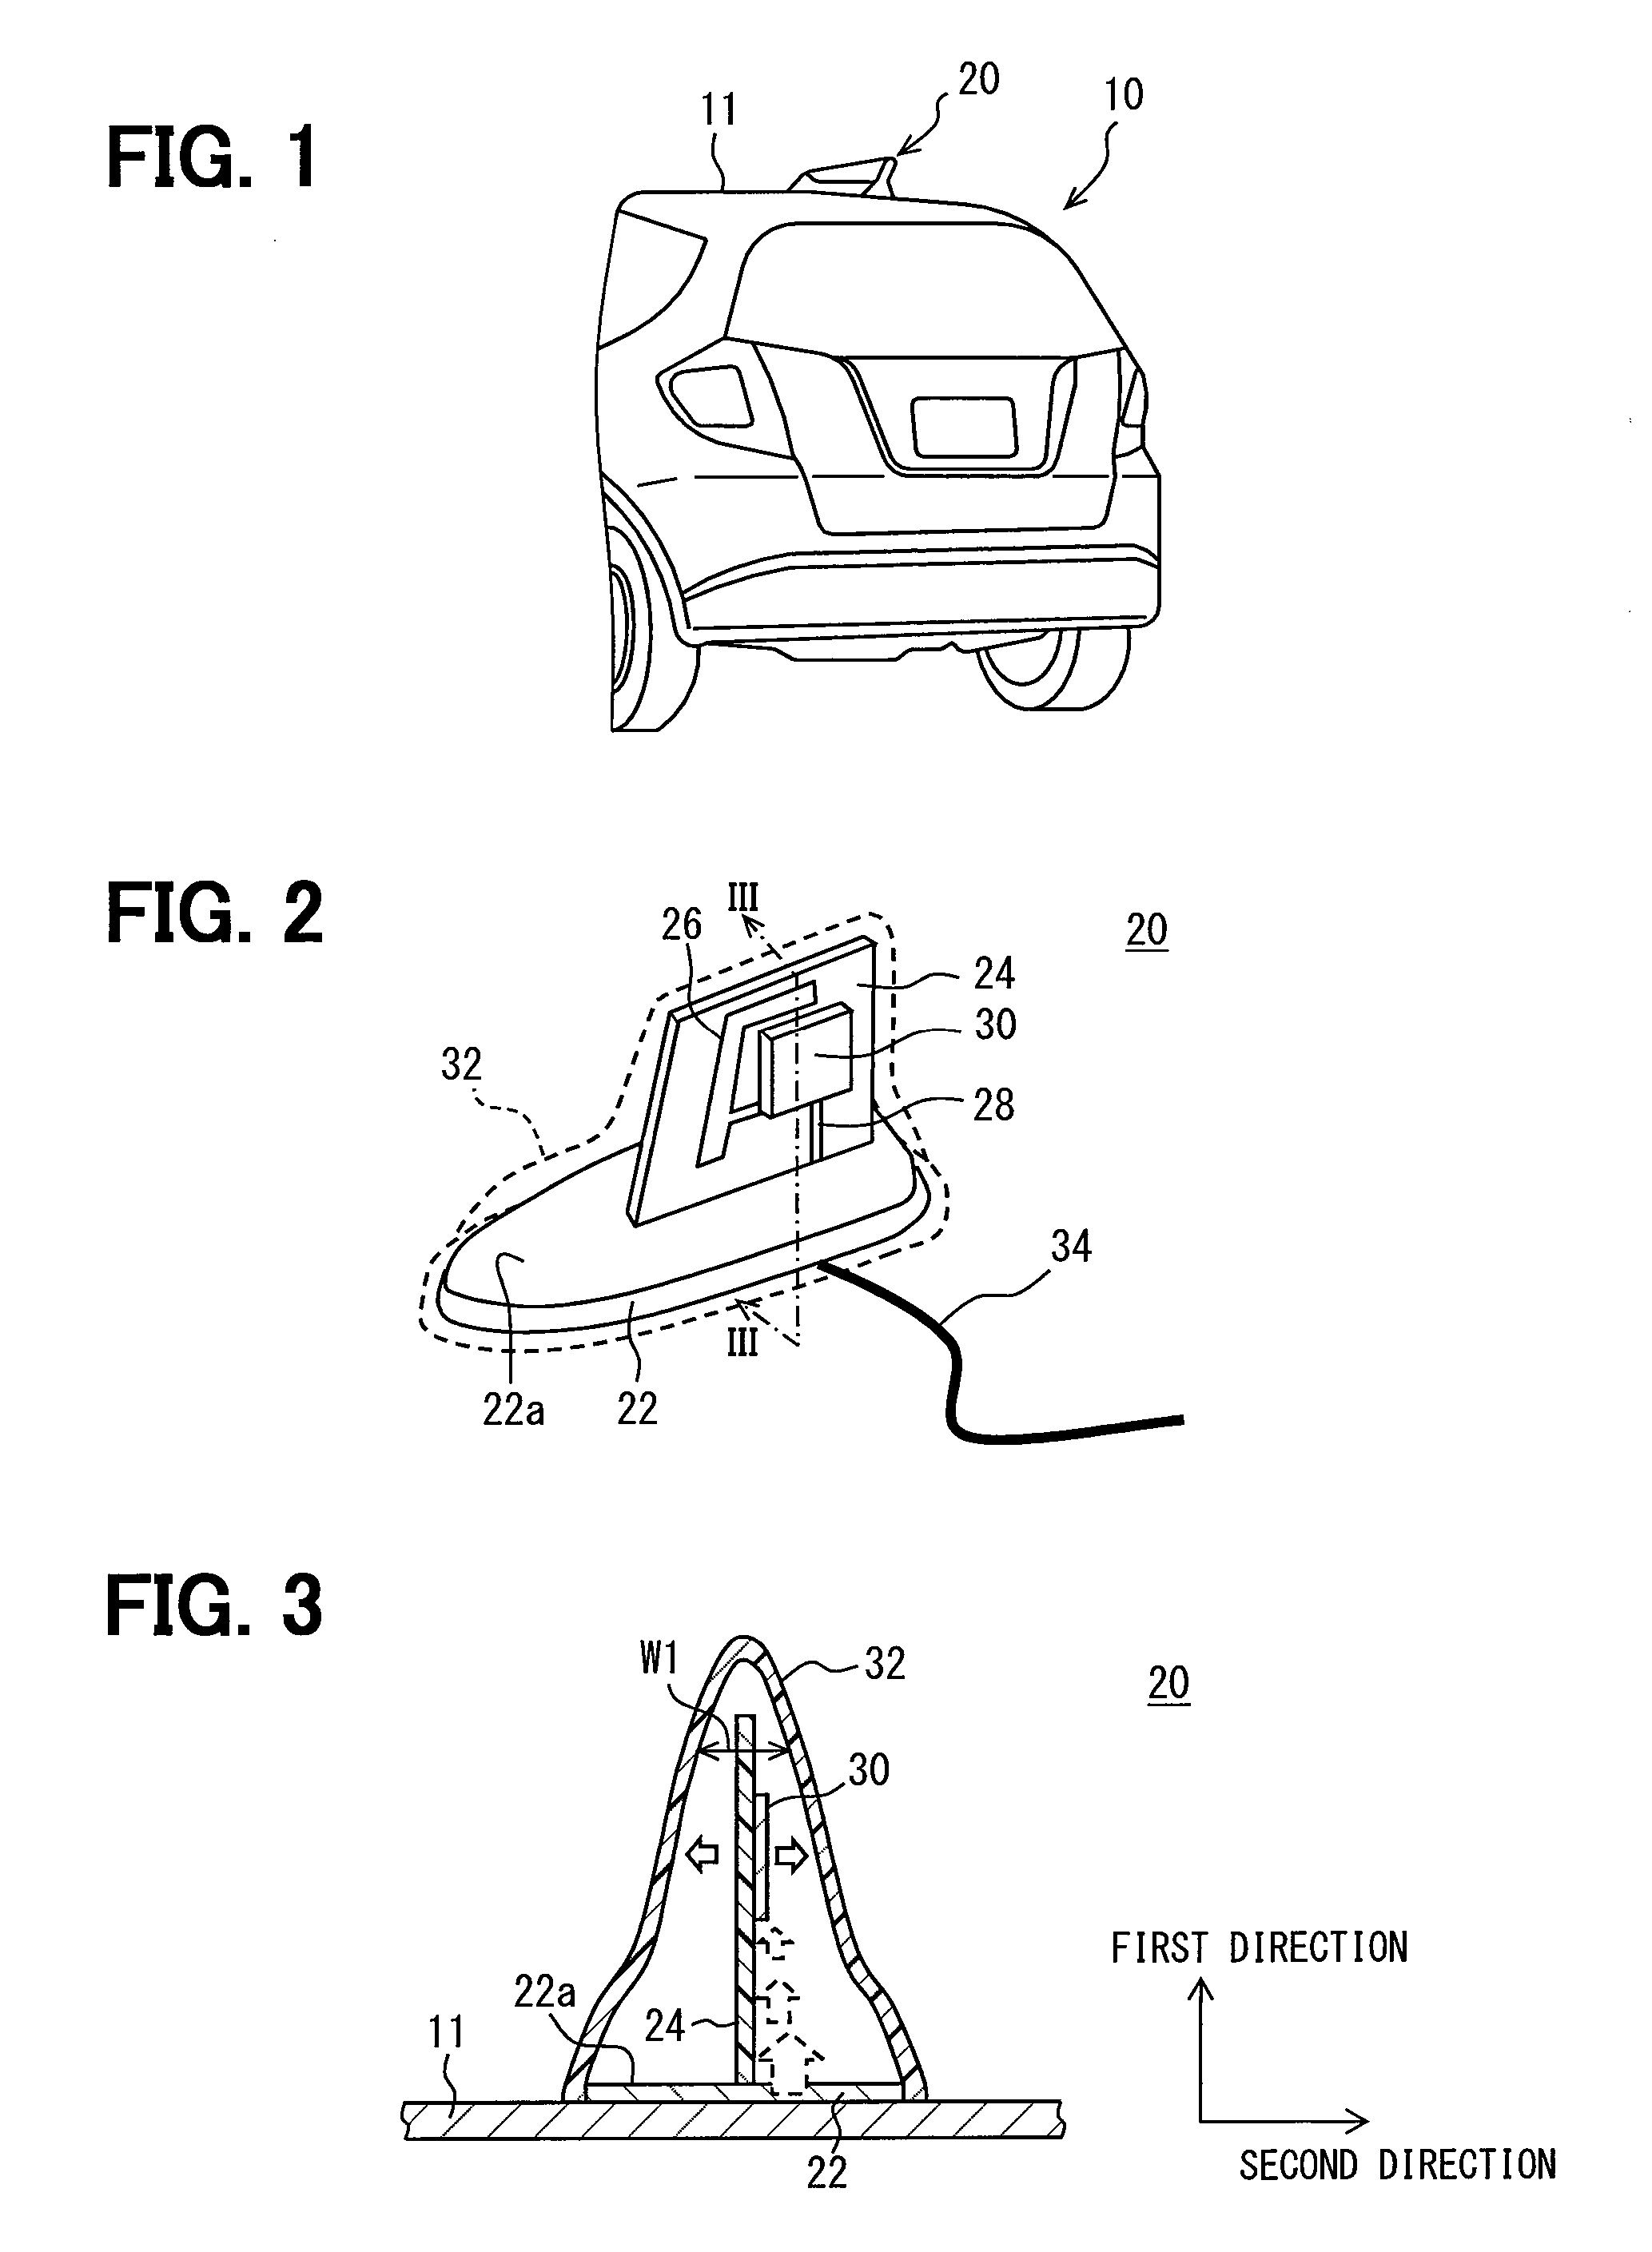 Vehicle-mounted antenna device